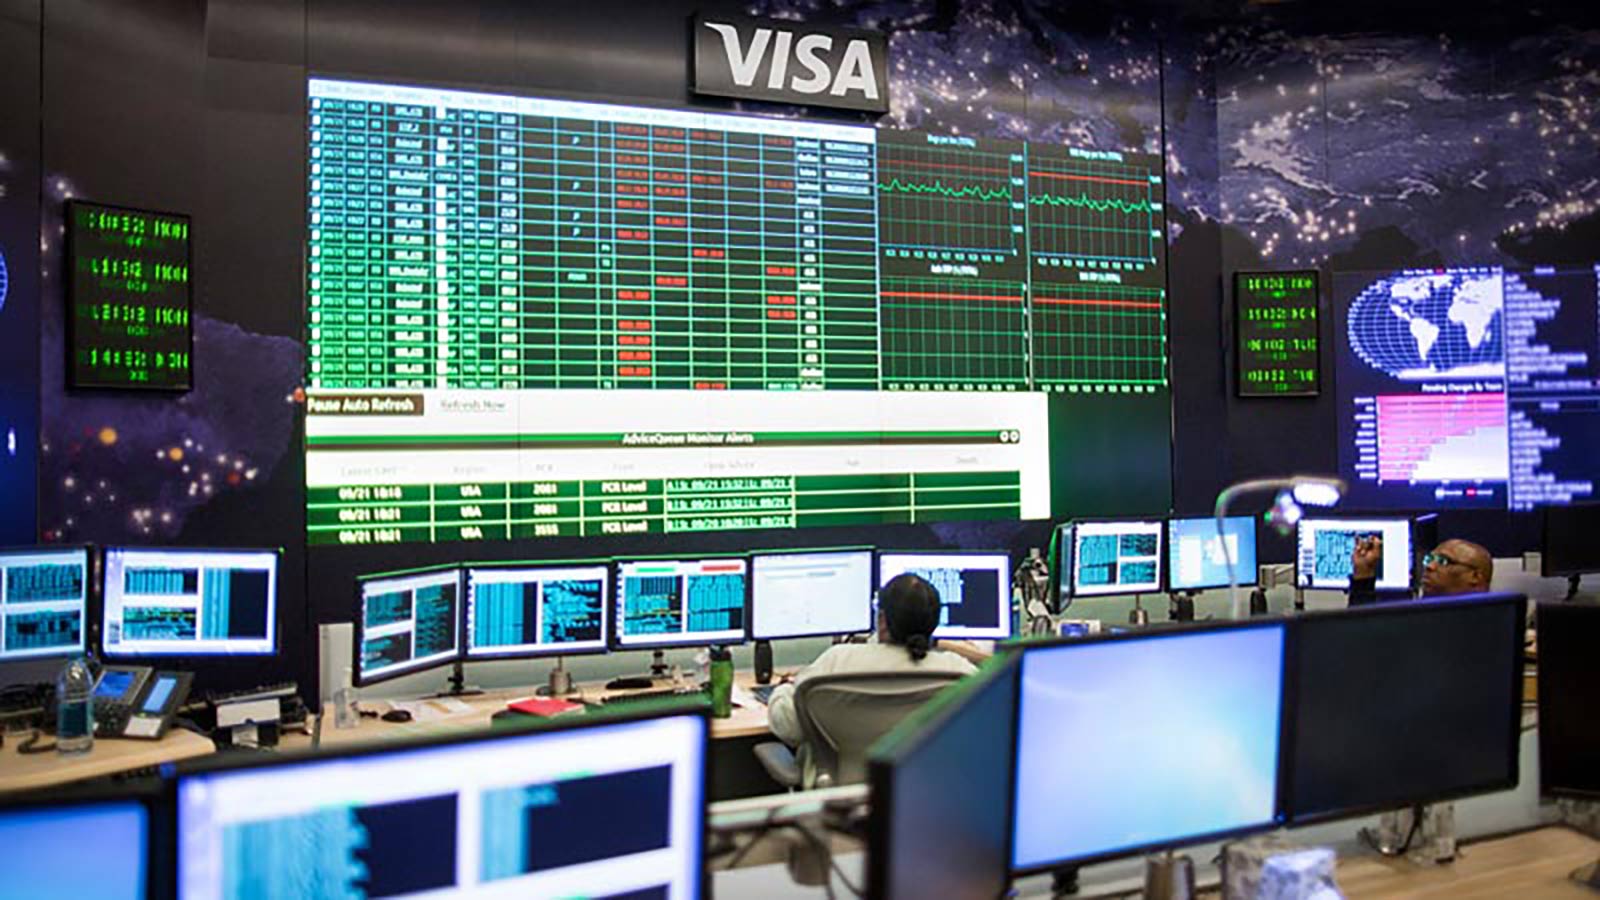 Visa data center control room.